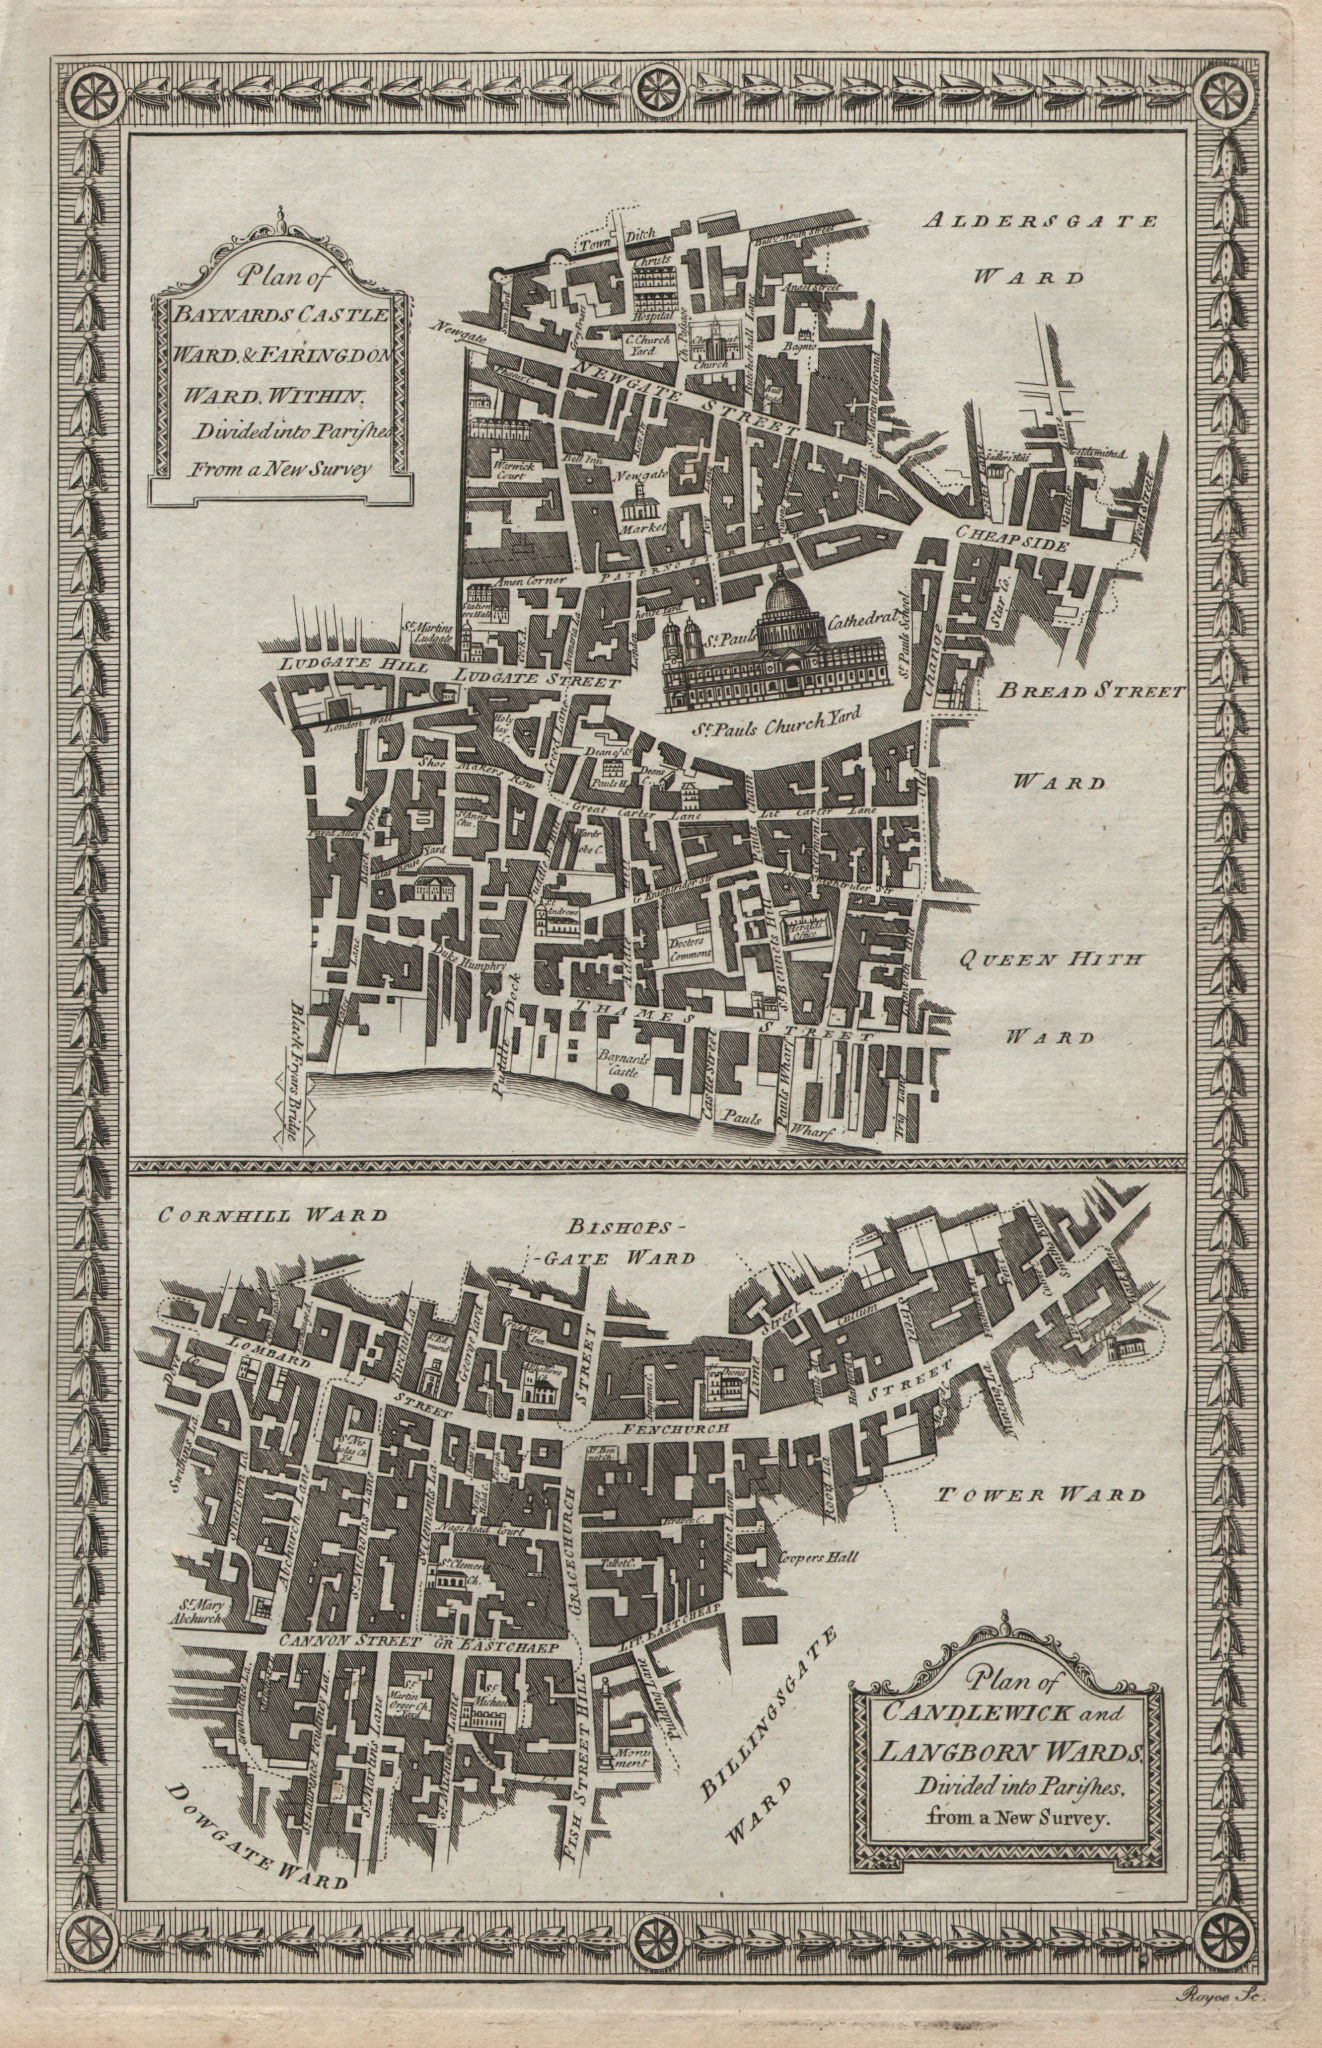 Associate Product Langbourn Candlewick Farringdon Castle Baynard Wards. London. THORNTON 1784 map